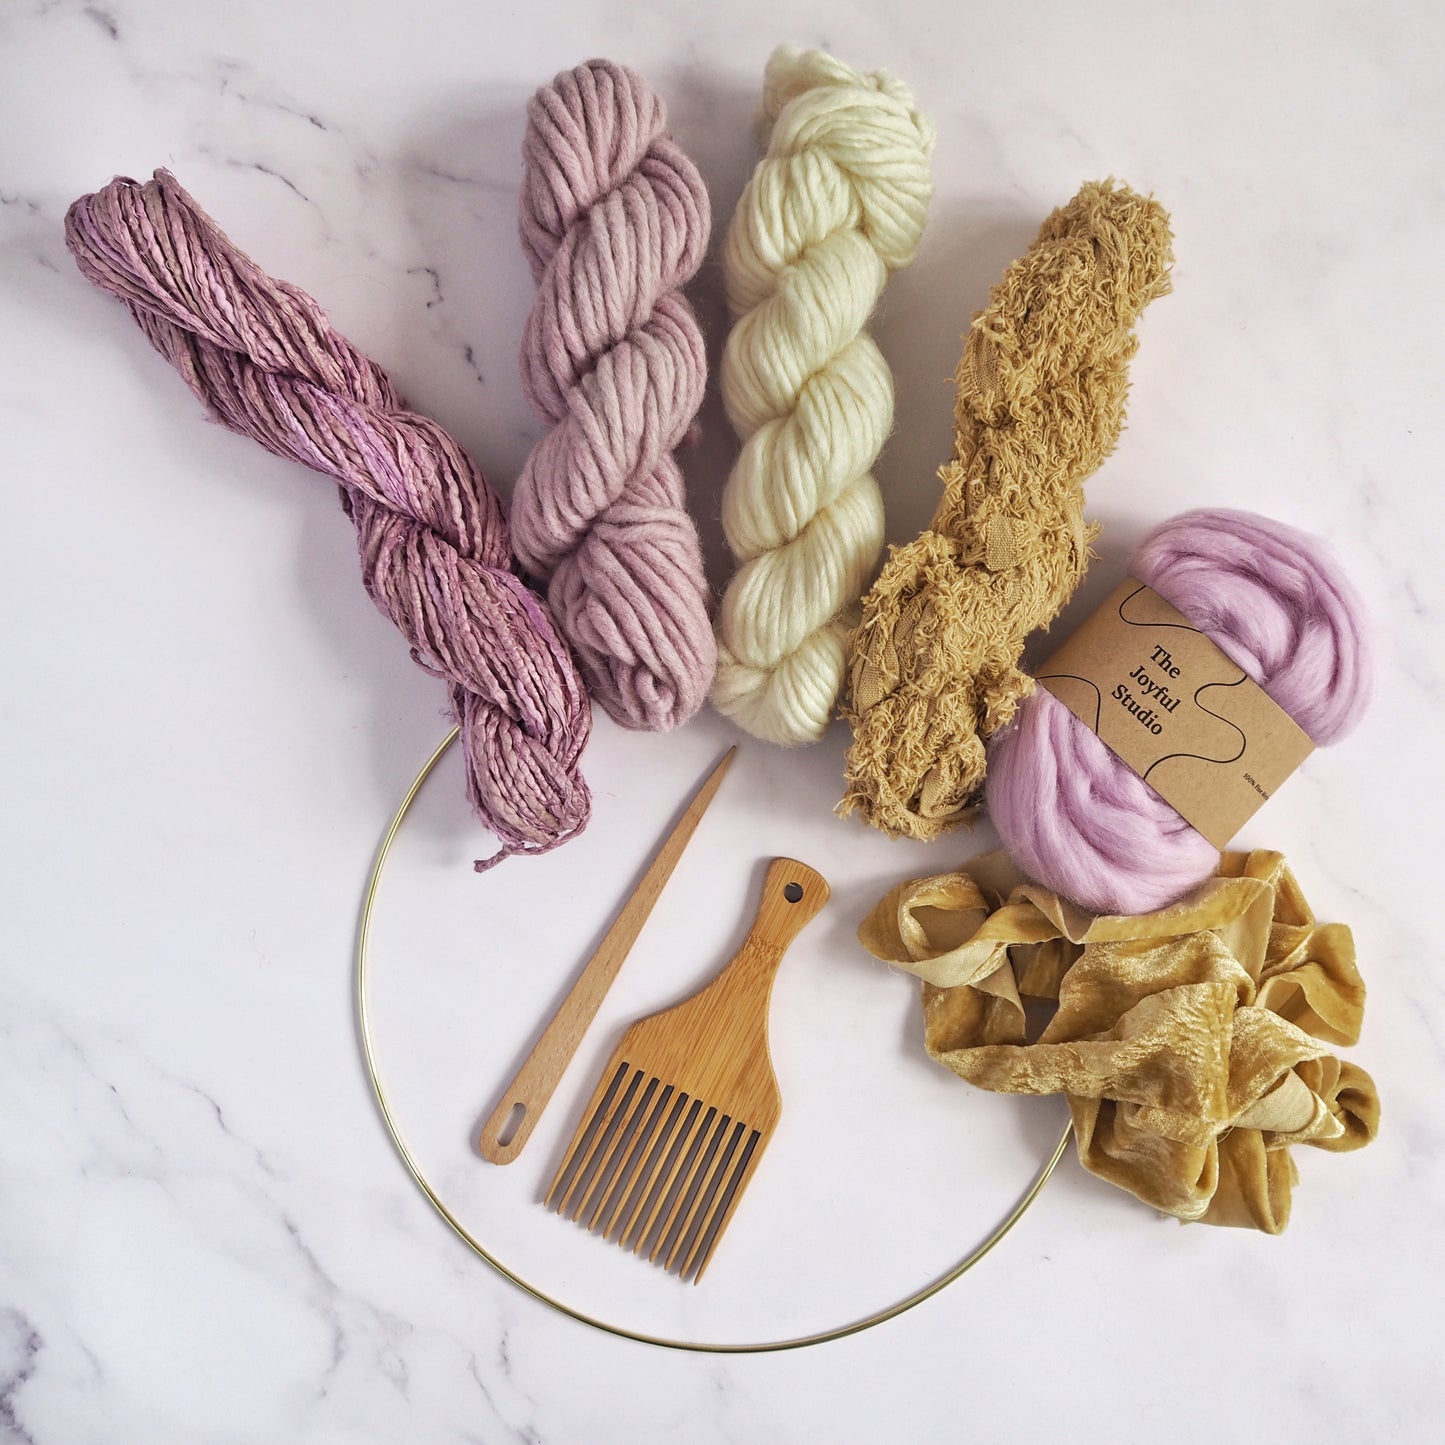 Weaving Project Kit - 'Heather Haze' The Joyful Studio